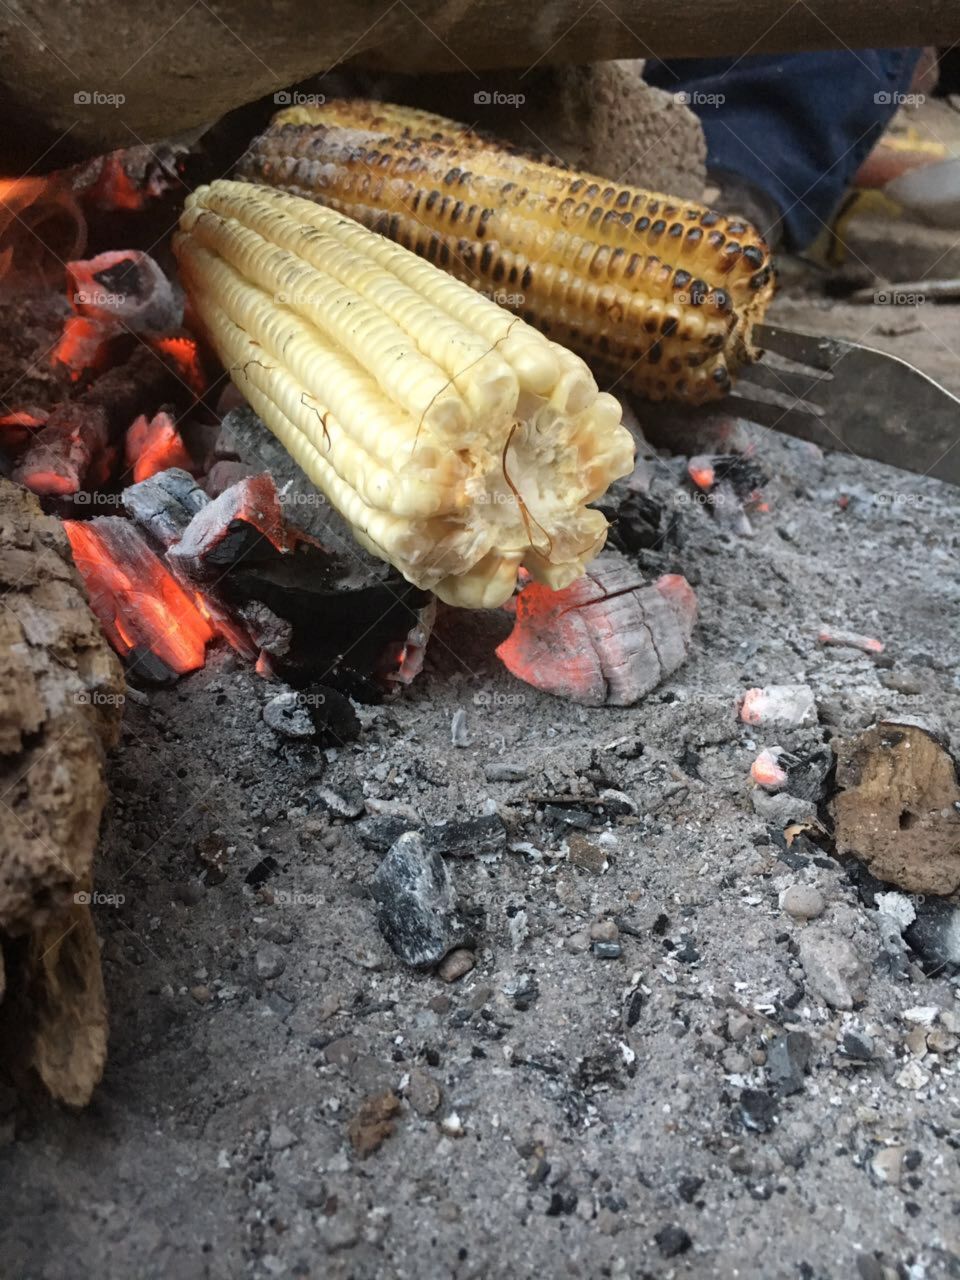 corn on the coals.